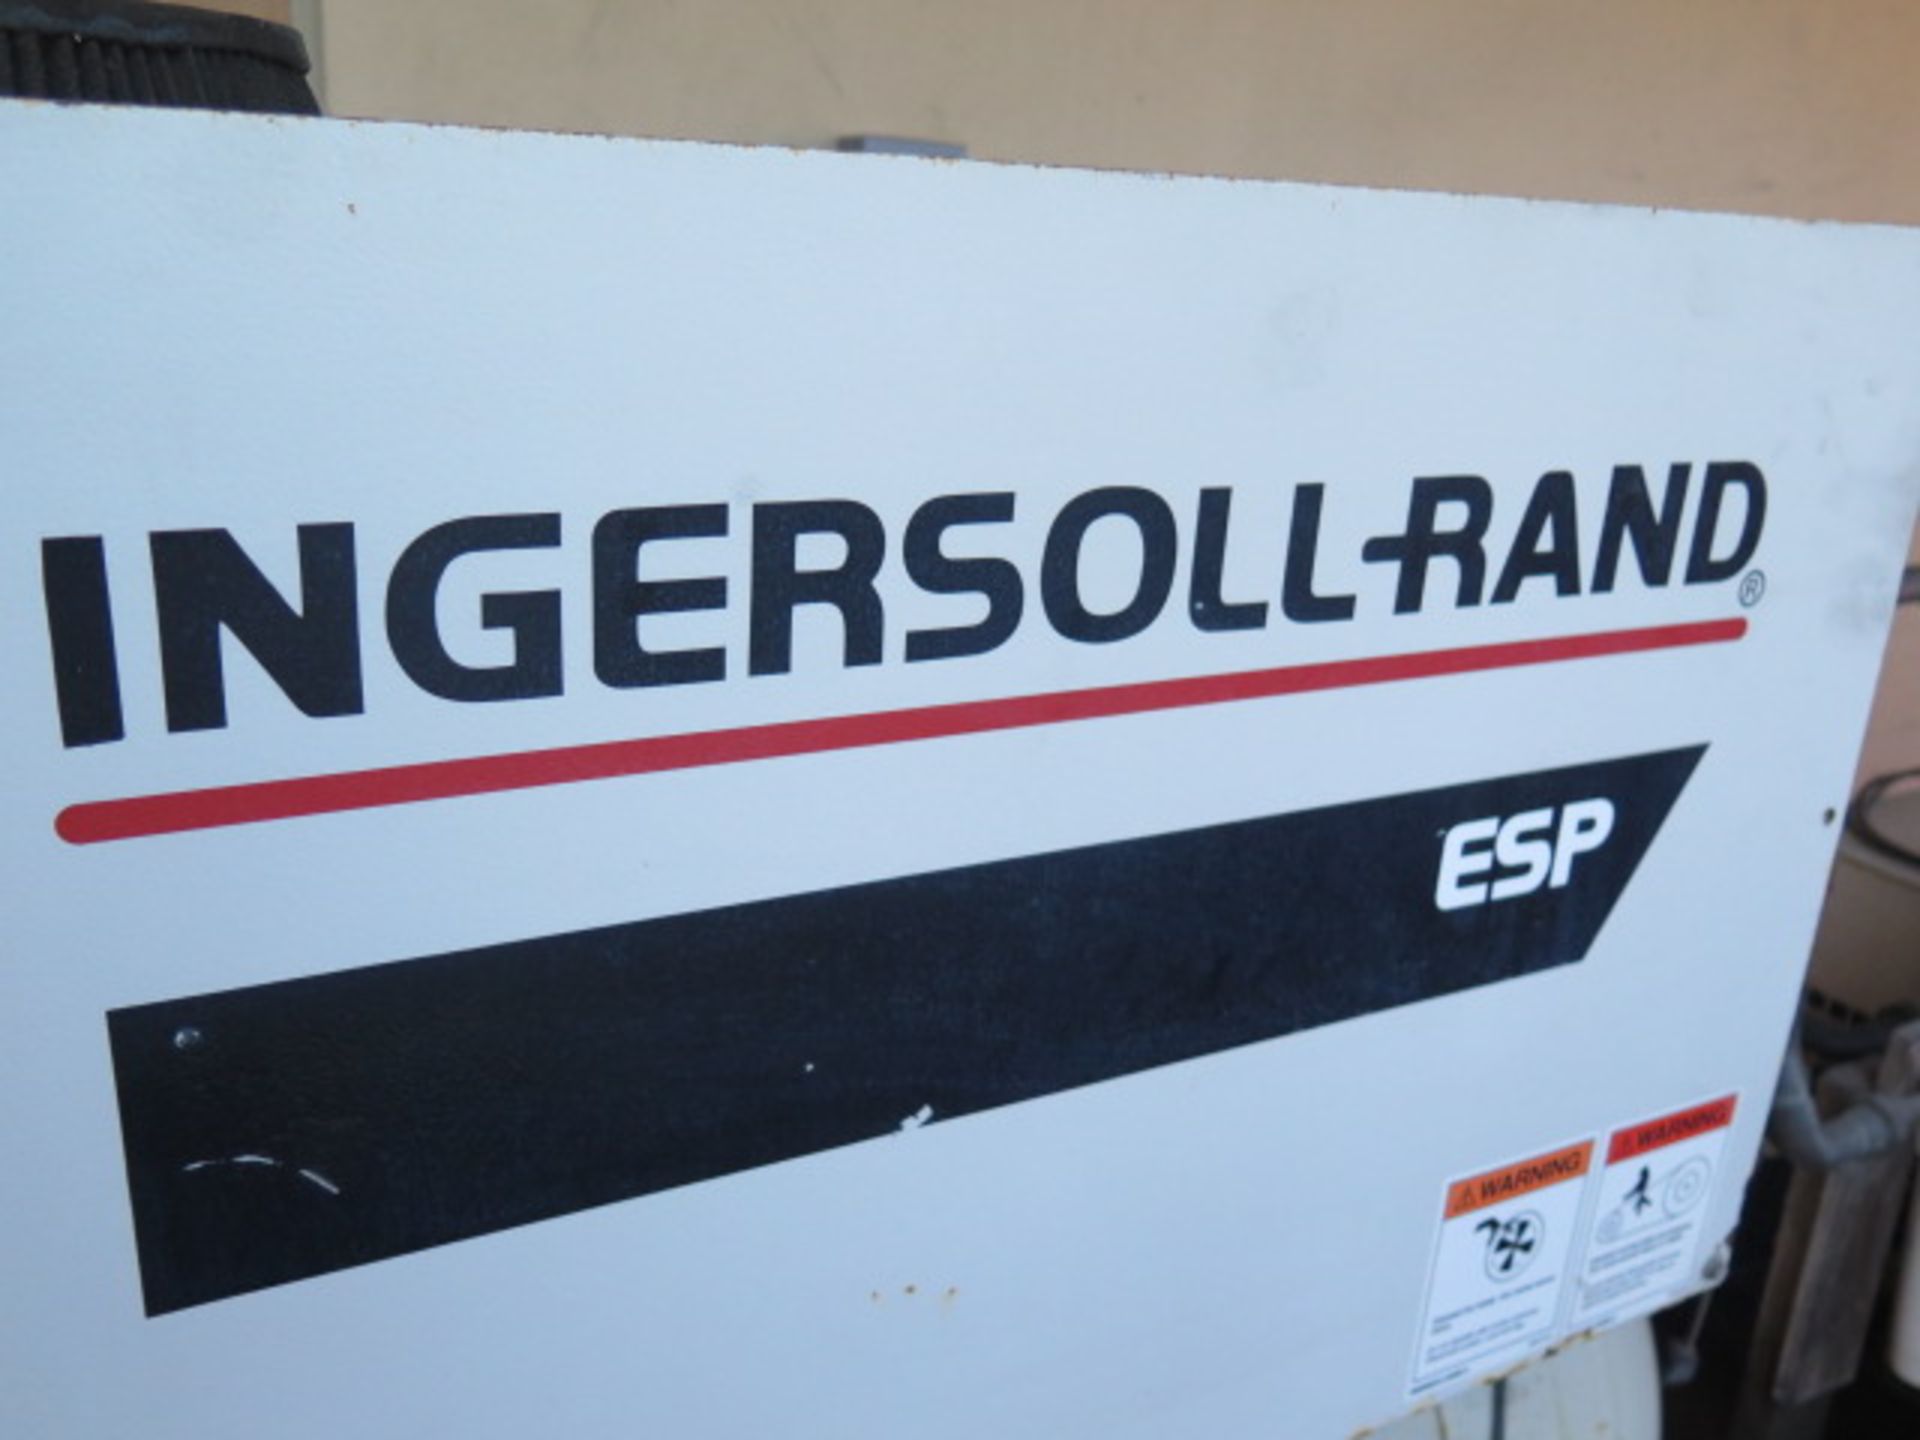 Ingersoll Rand EP10-ESP 10Hp Rotary Air Compressor s/n AN1625U46033 w/ 35 CFM @ 125 PSIG, 120 Gallon - Image 2 of 3